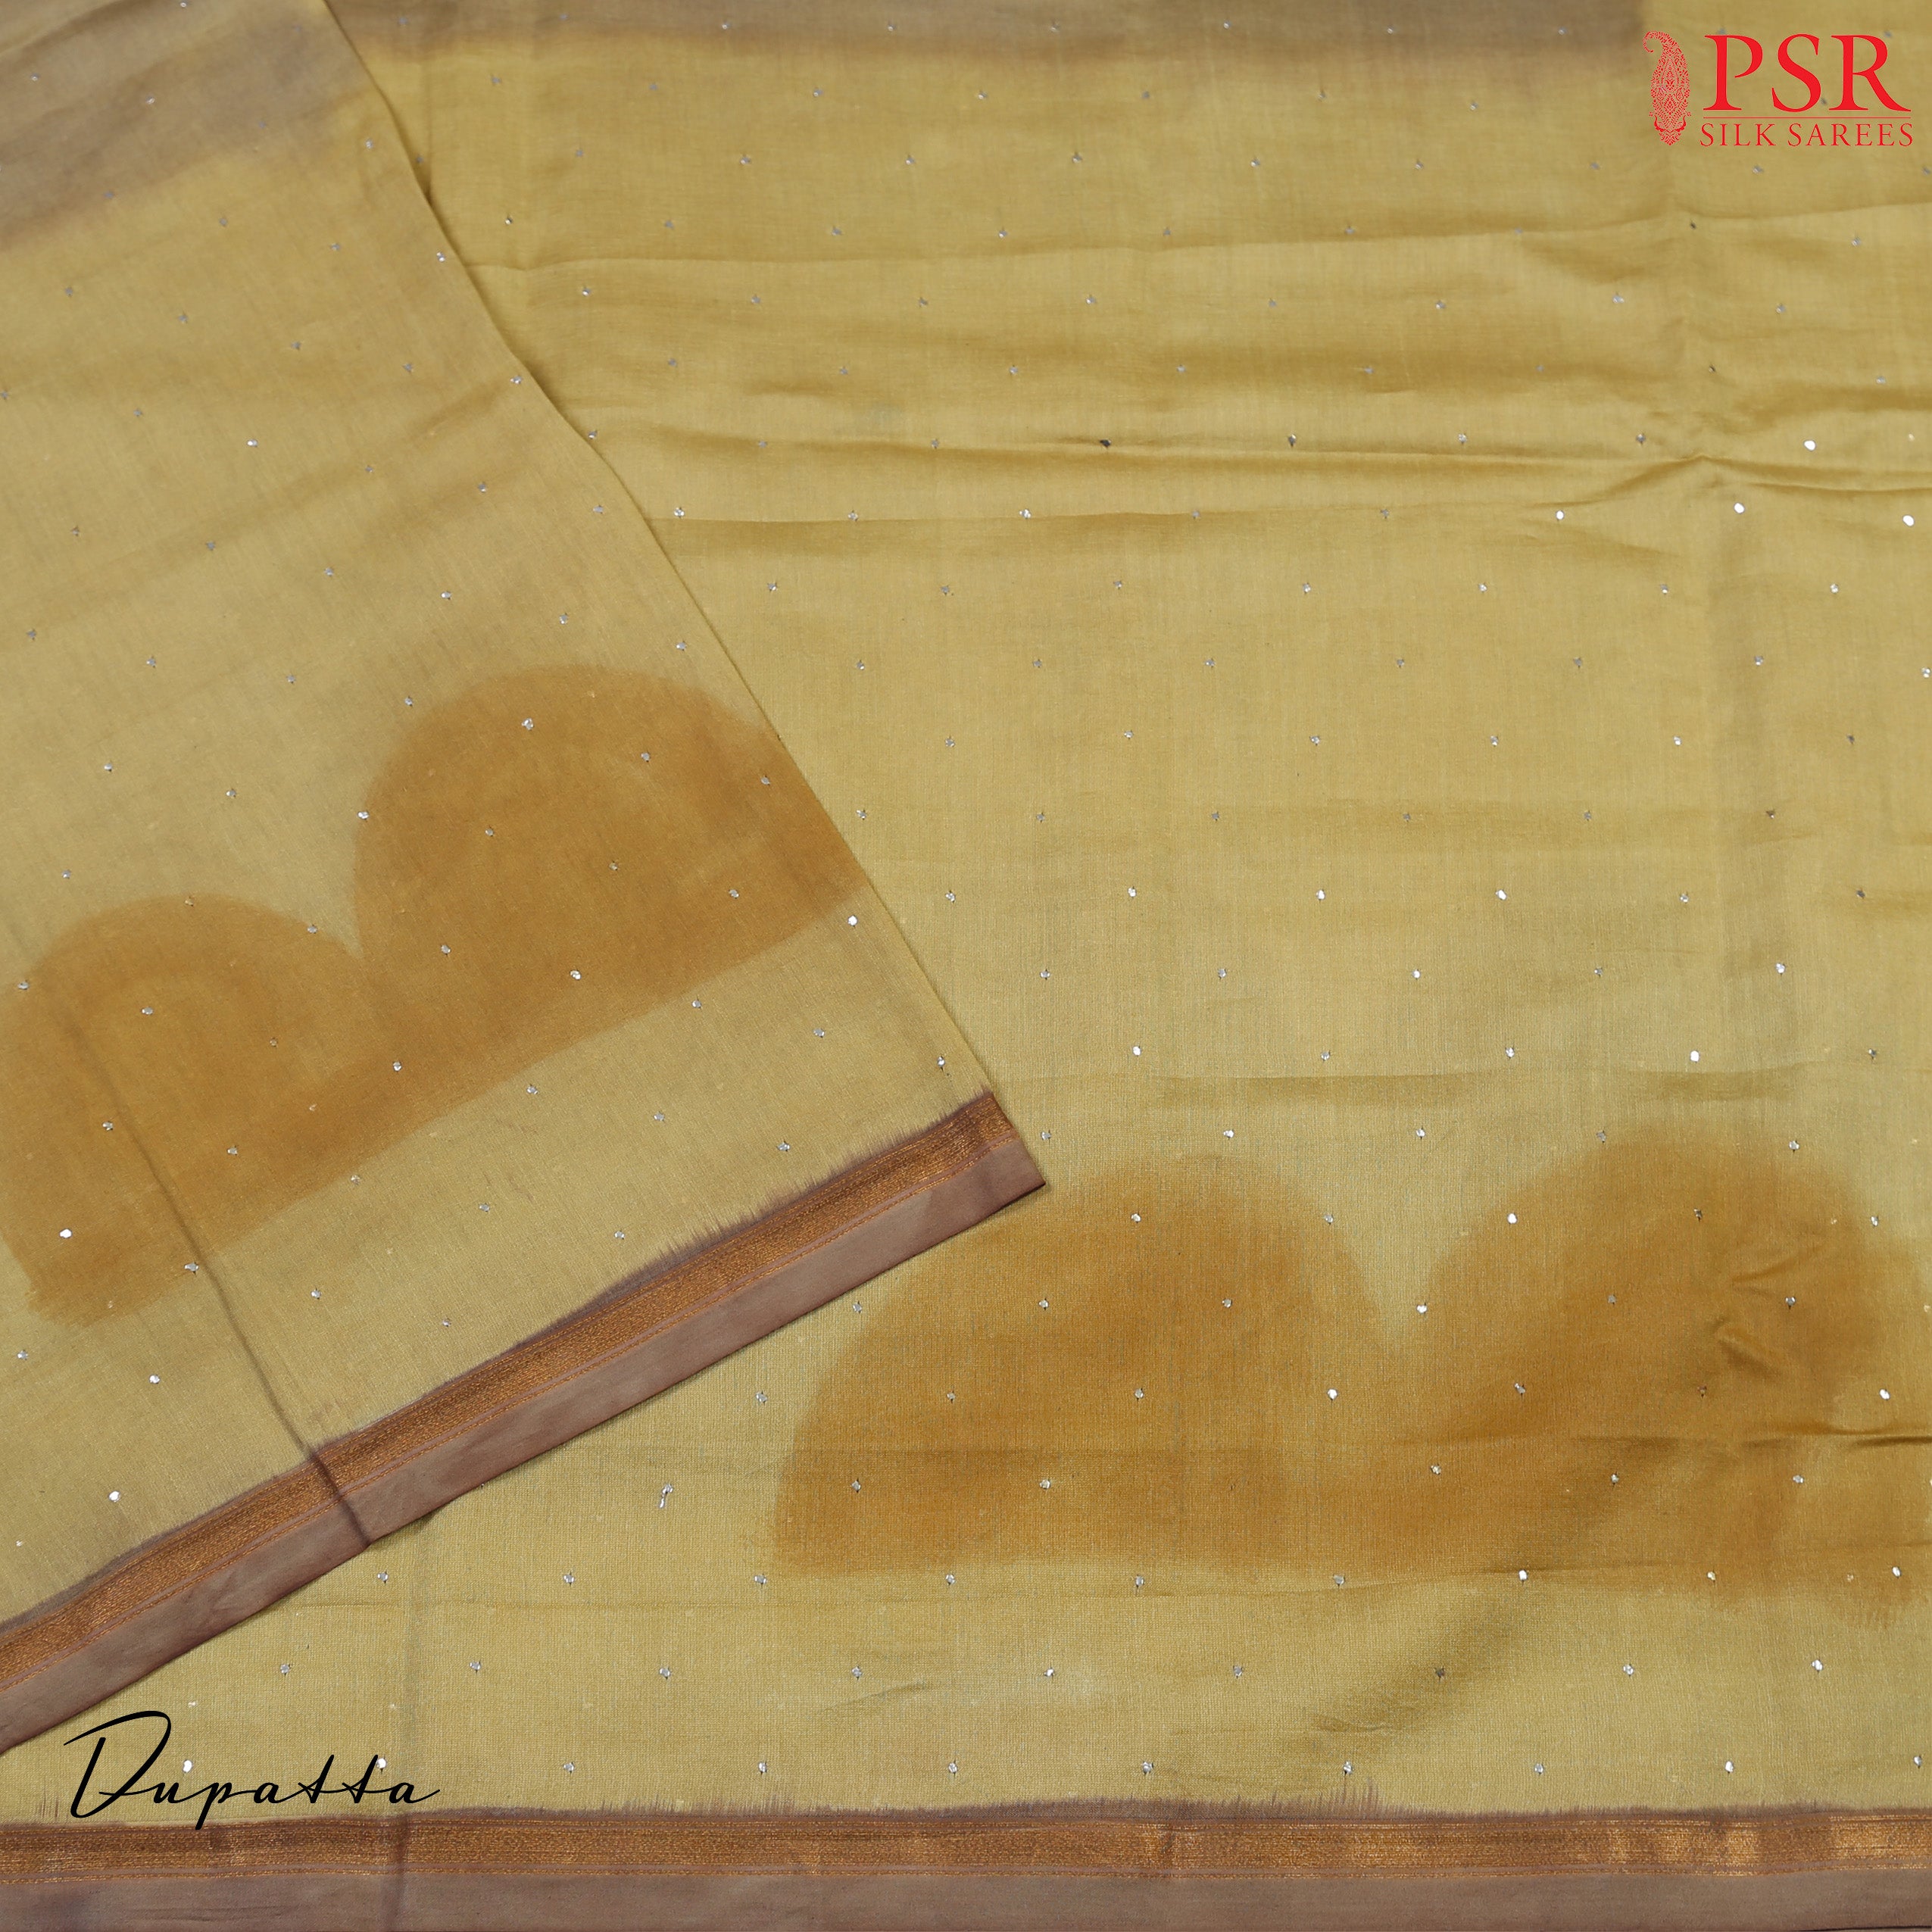 Chanderi Patta Cotton Dress Material - Chikoo Brown & Beige